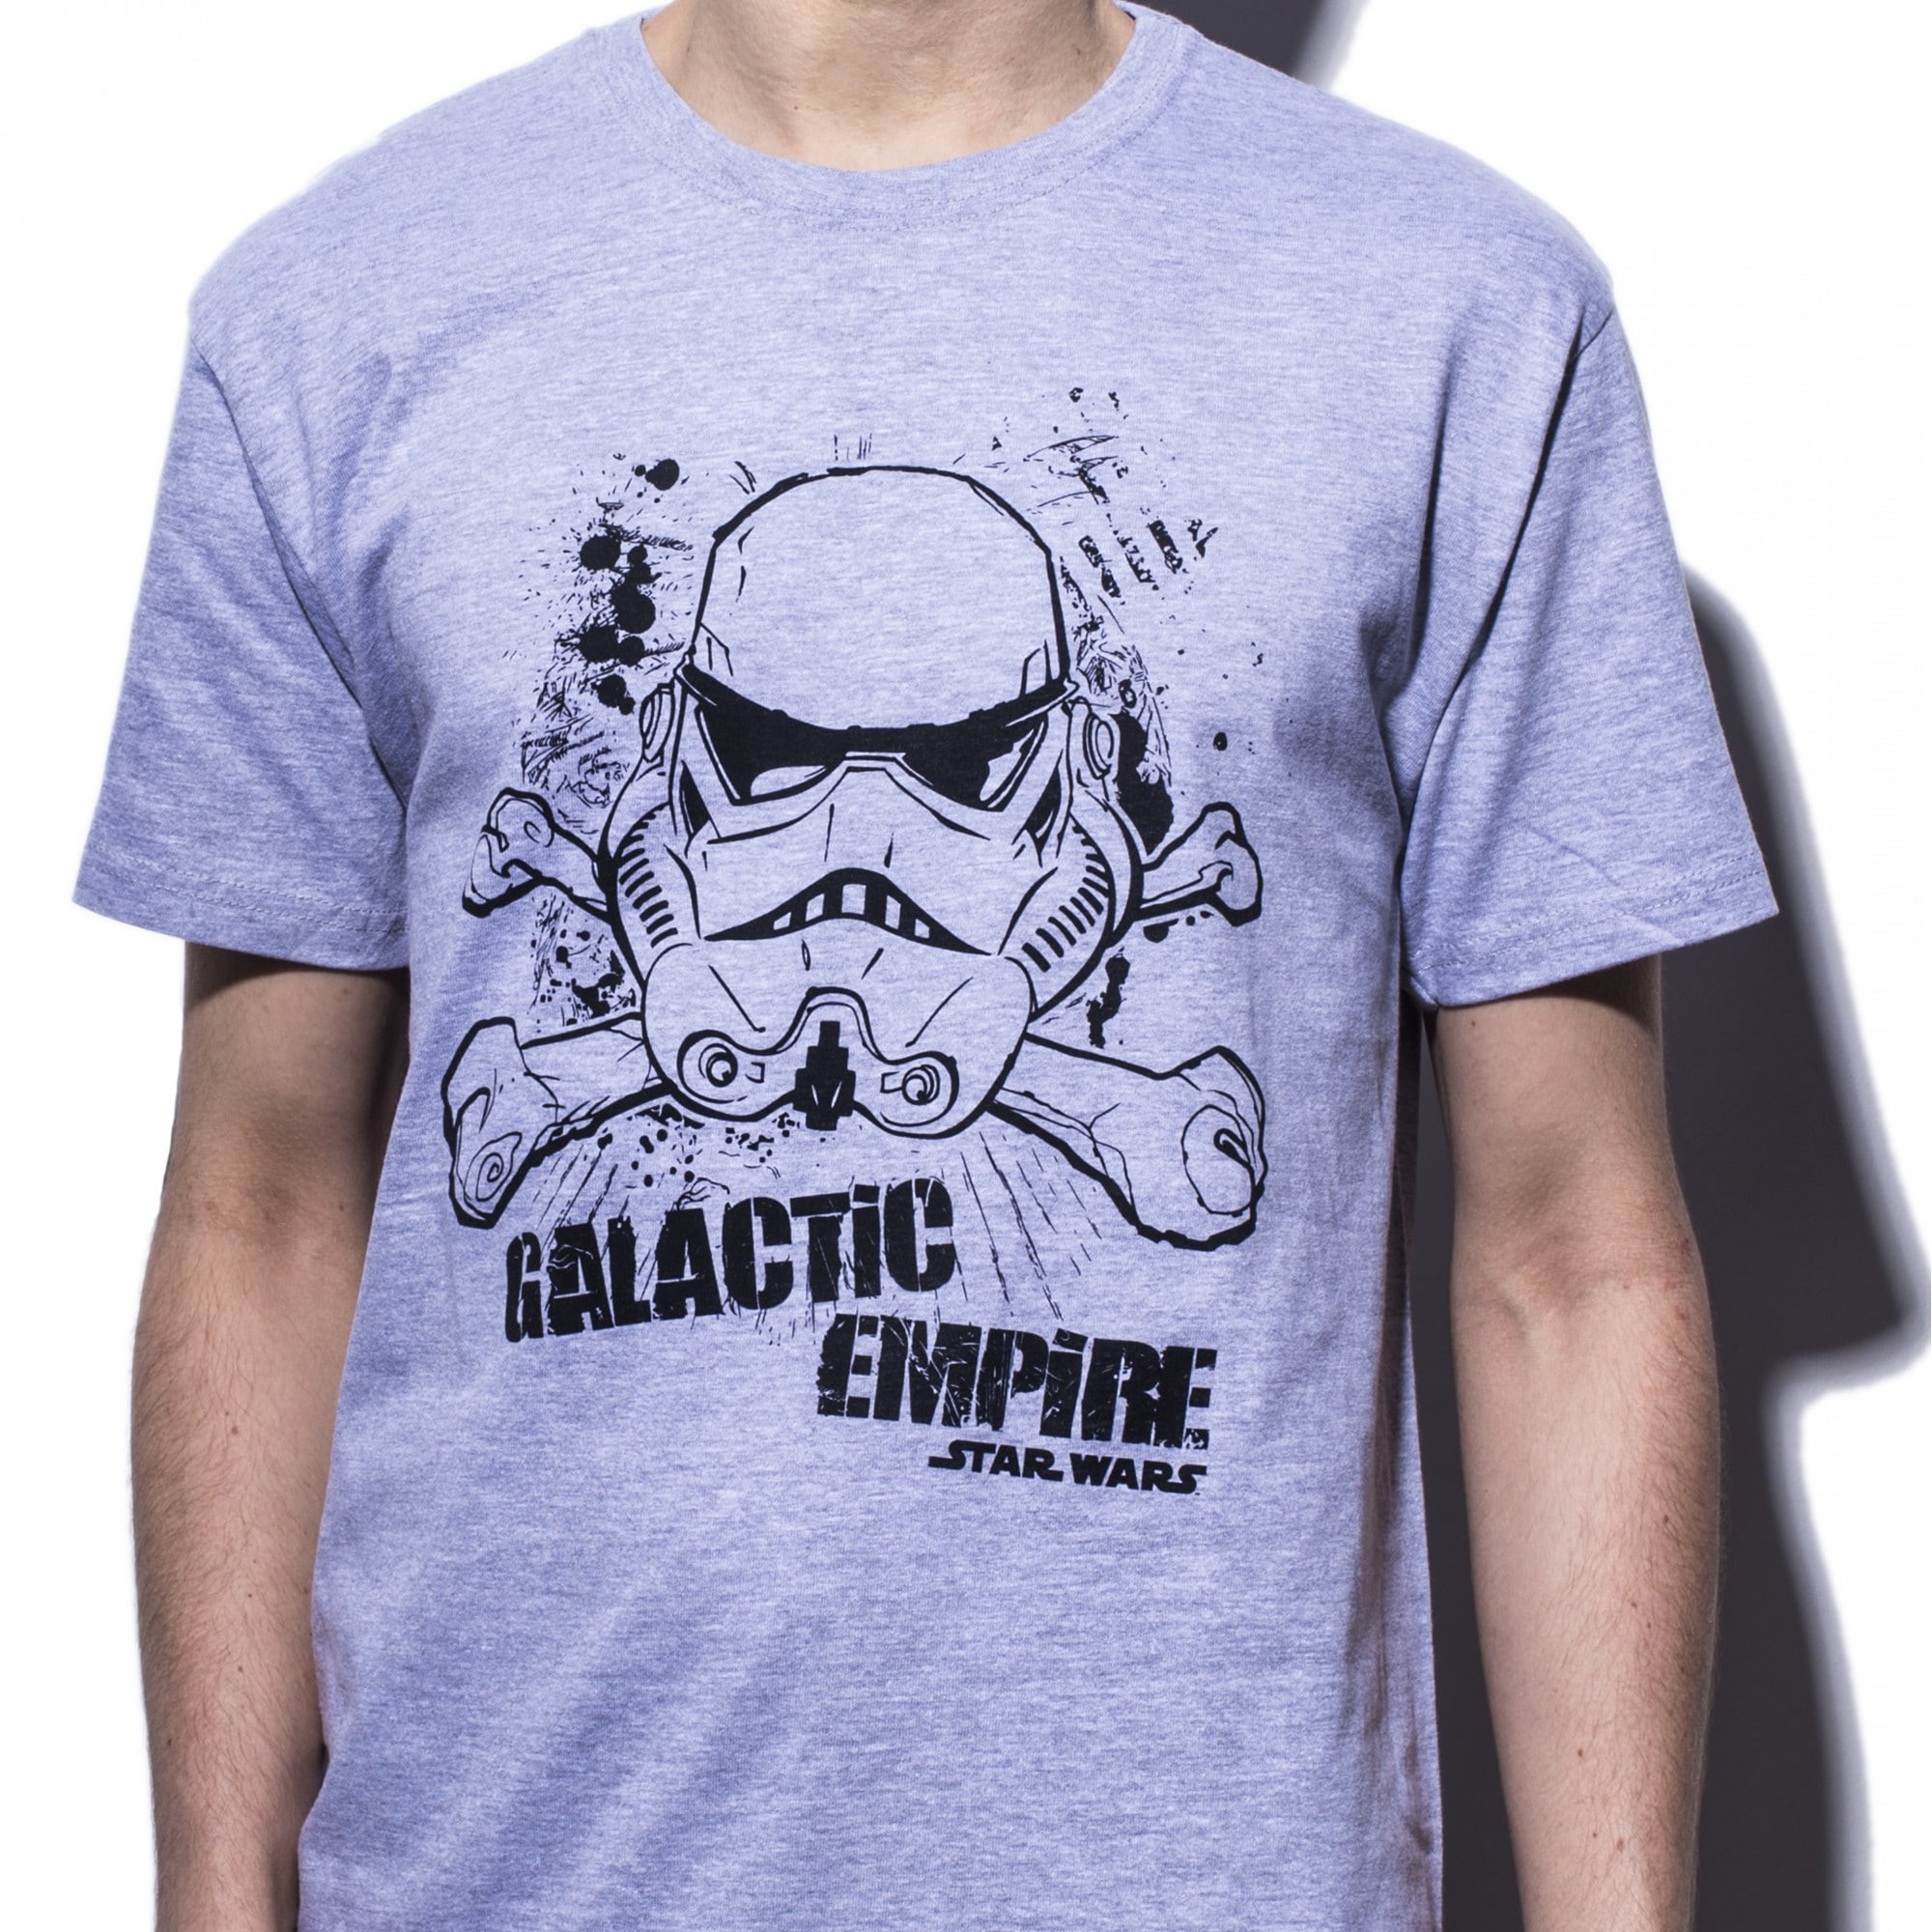 STAR WARS - Tshirt "Galactic Empire" man SS sport  - basic L Gray - 1